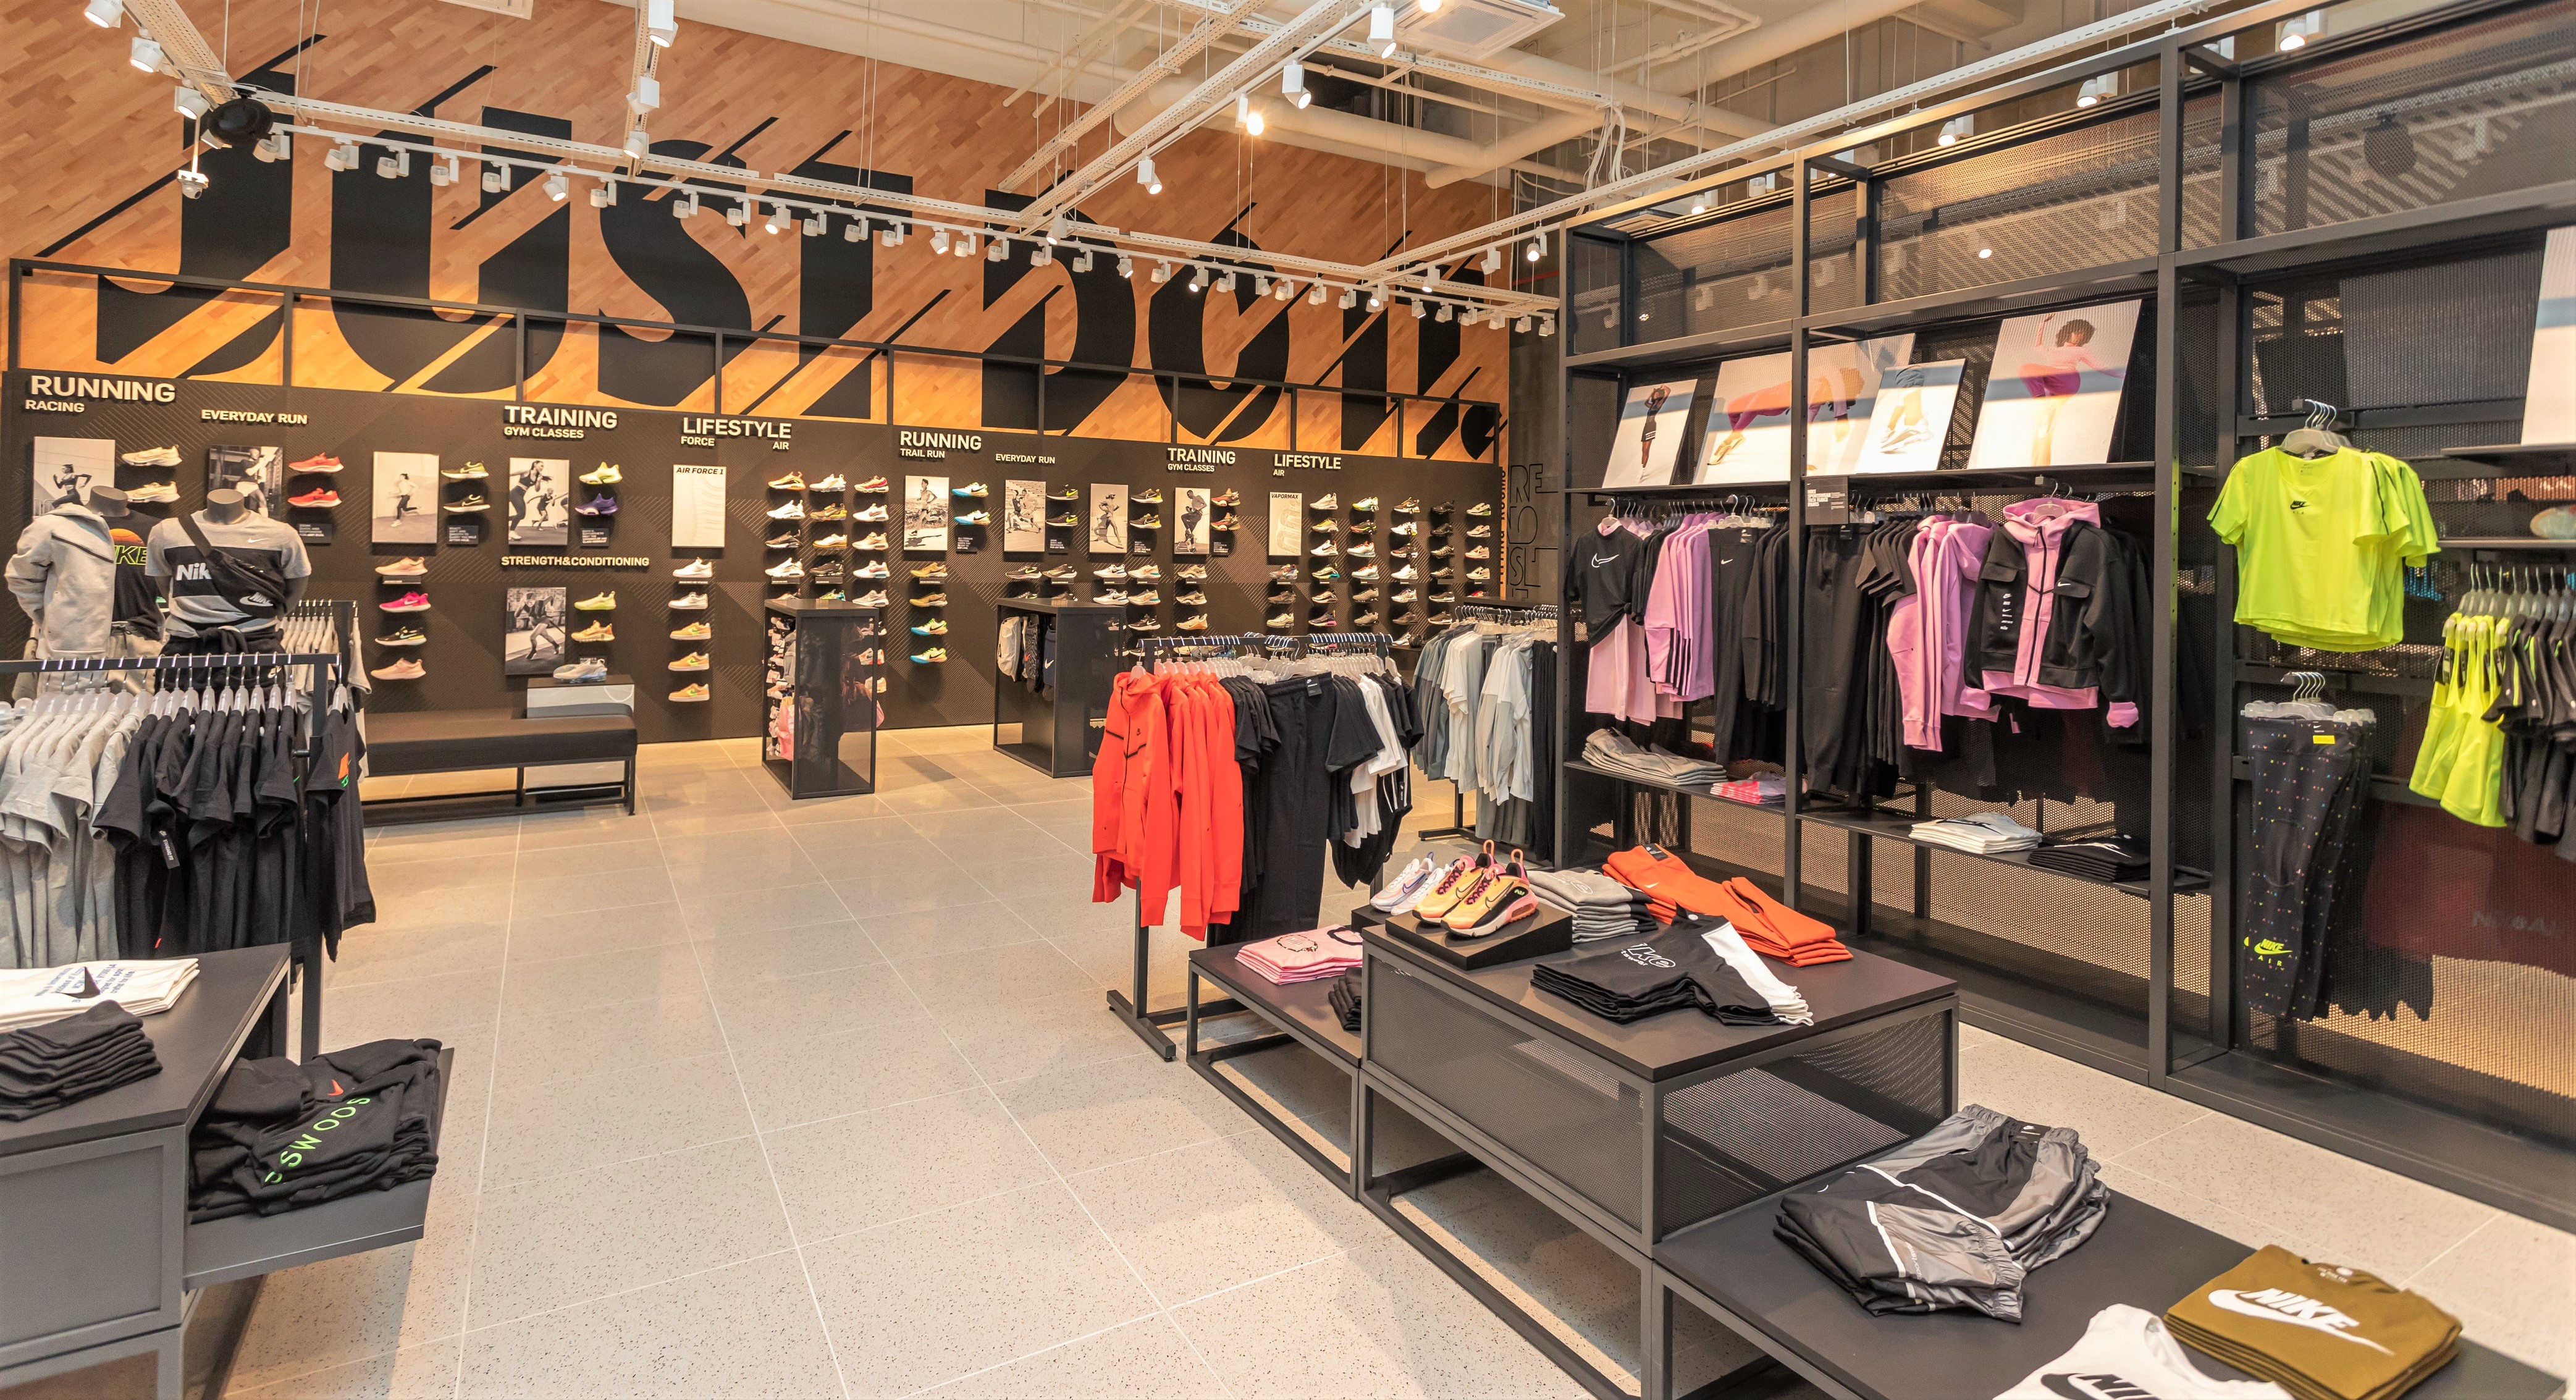 Accustom cleanse Overcoat Sport Time Balkans, noul distribuitor Nike, a deschis primul magazin  monobrand în Mega Mall, București | Shopping In Romania